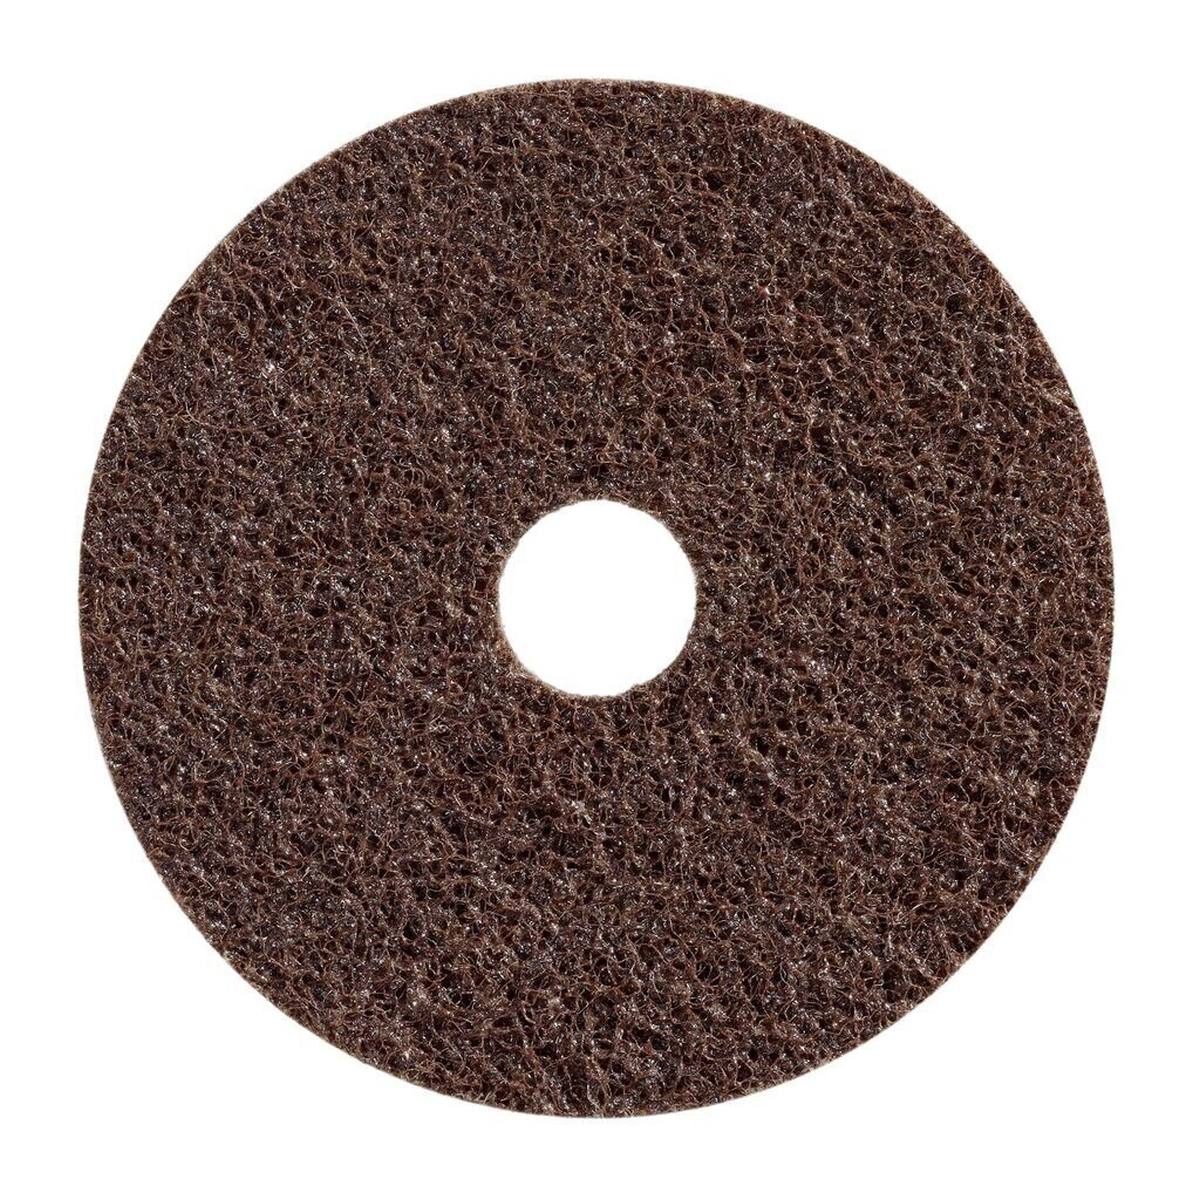 3M Scotch-Brite disco no tejido SC-DH con centrado, marrón, 125 mm, 22 mm, A, grueso #159272